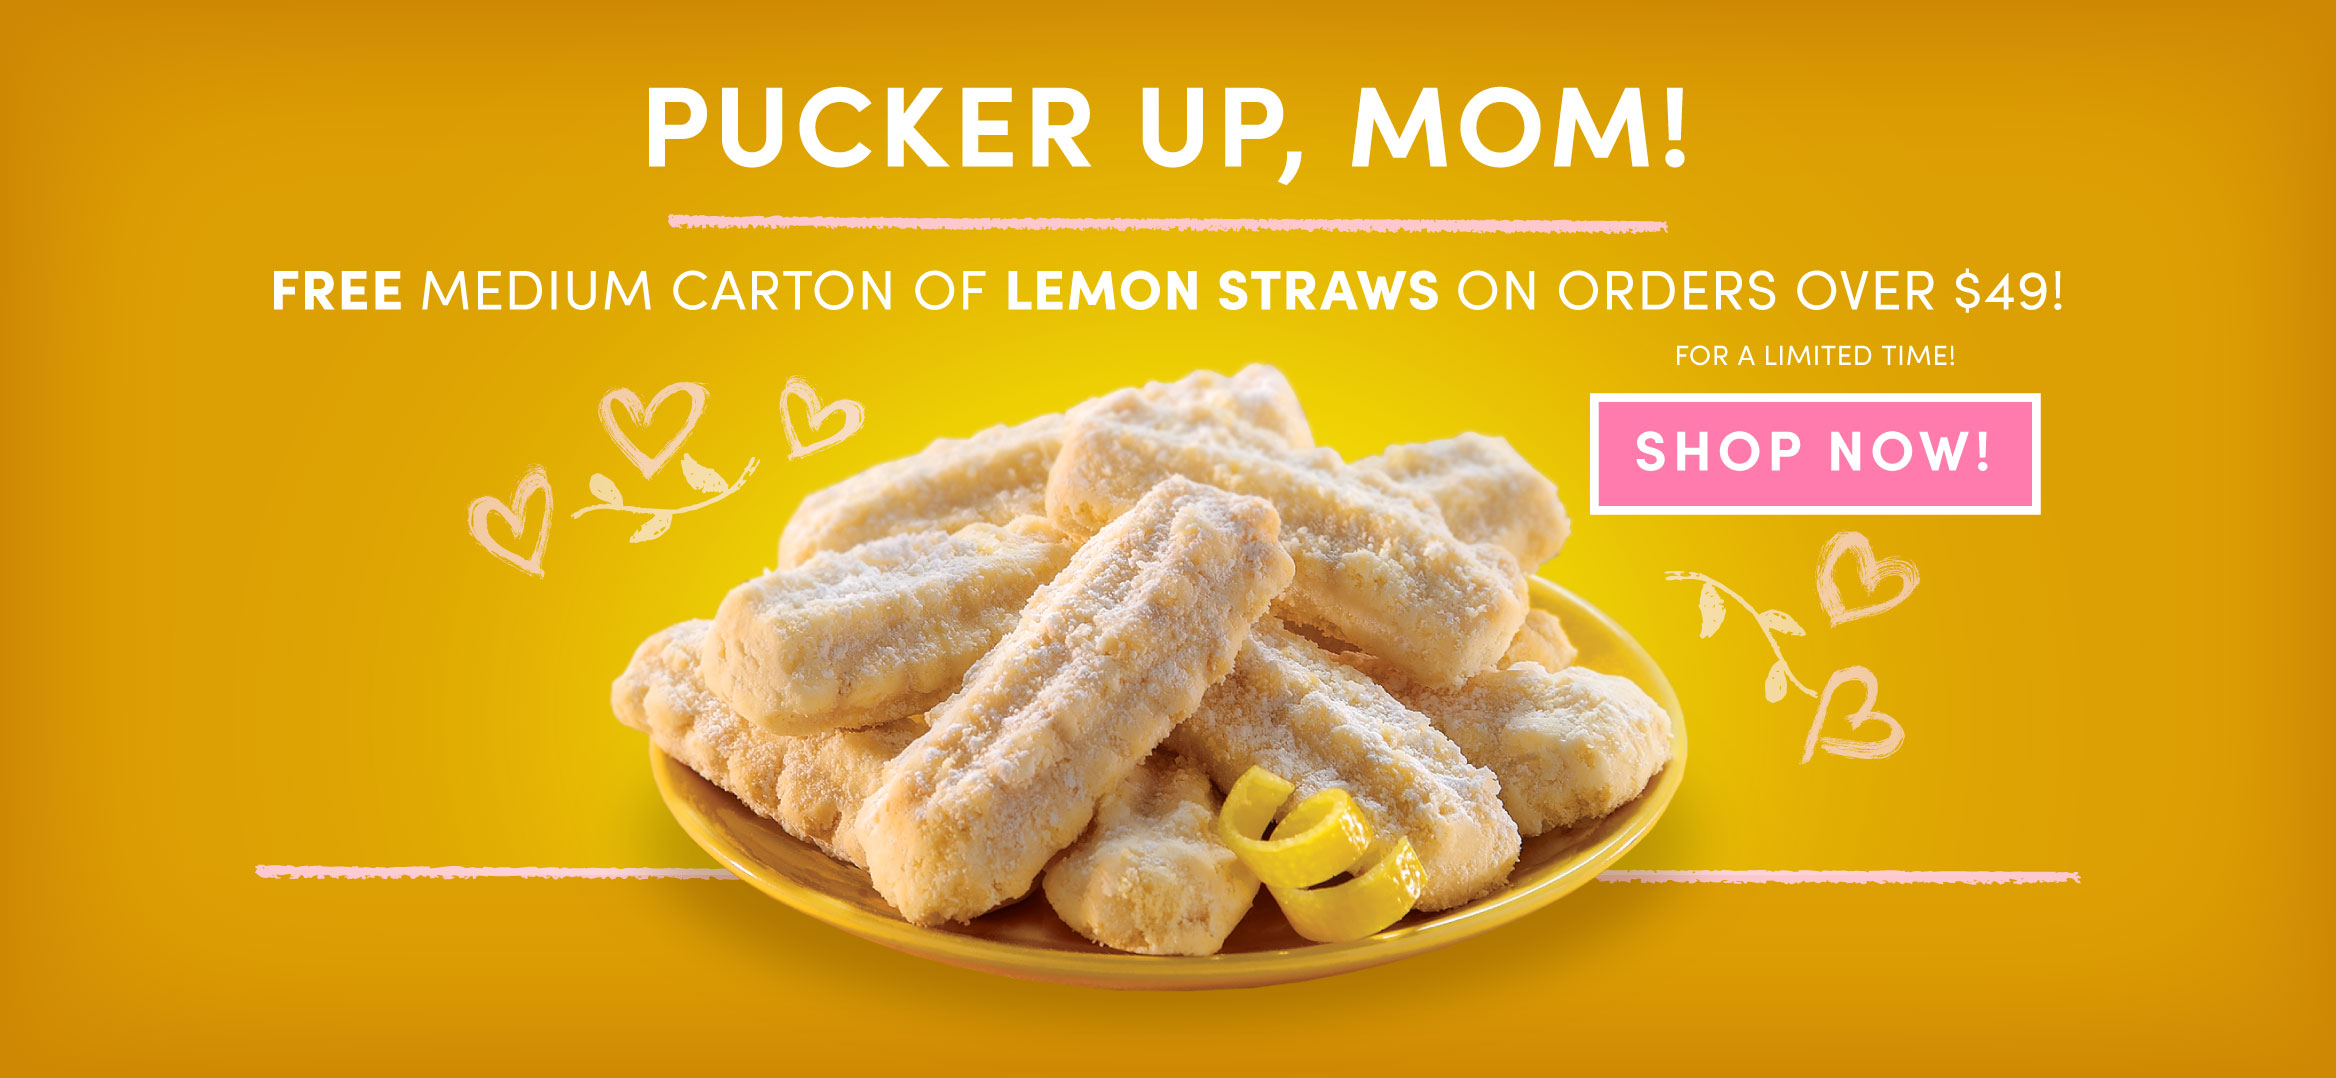 Free Medium Lemon Straws